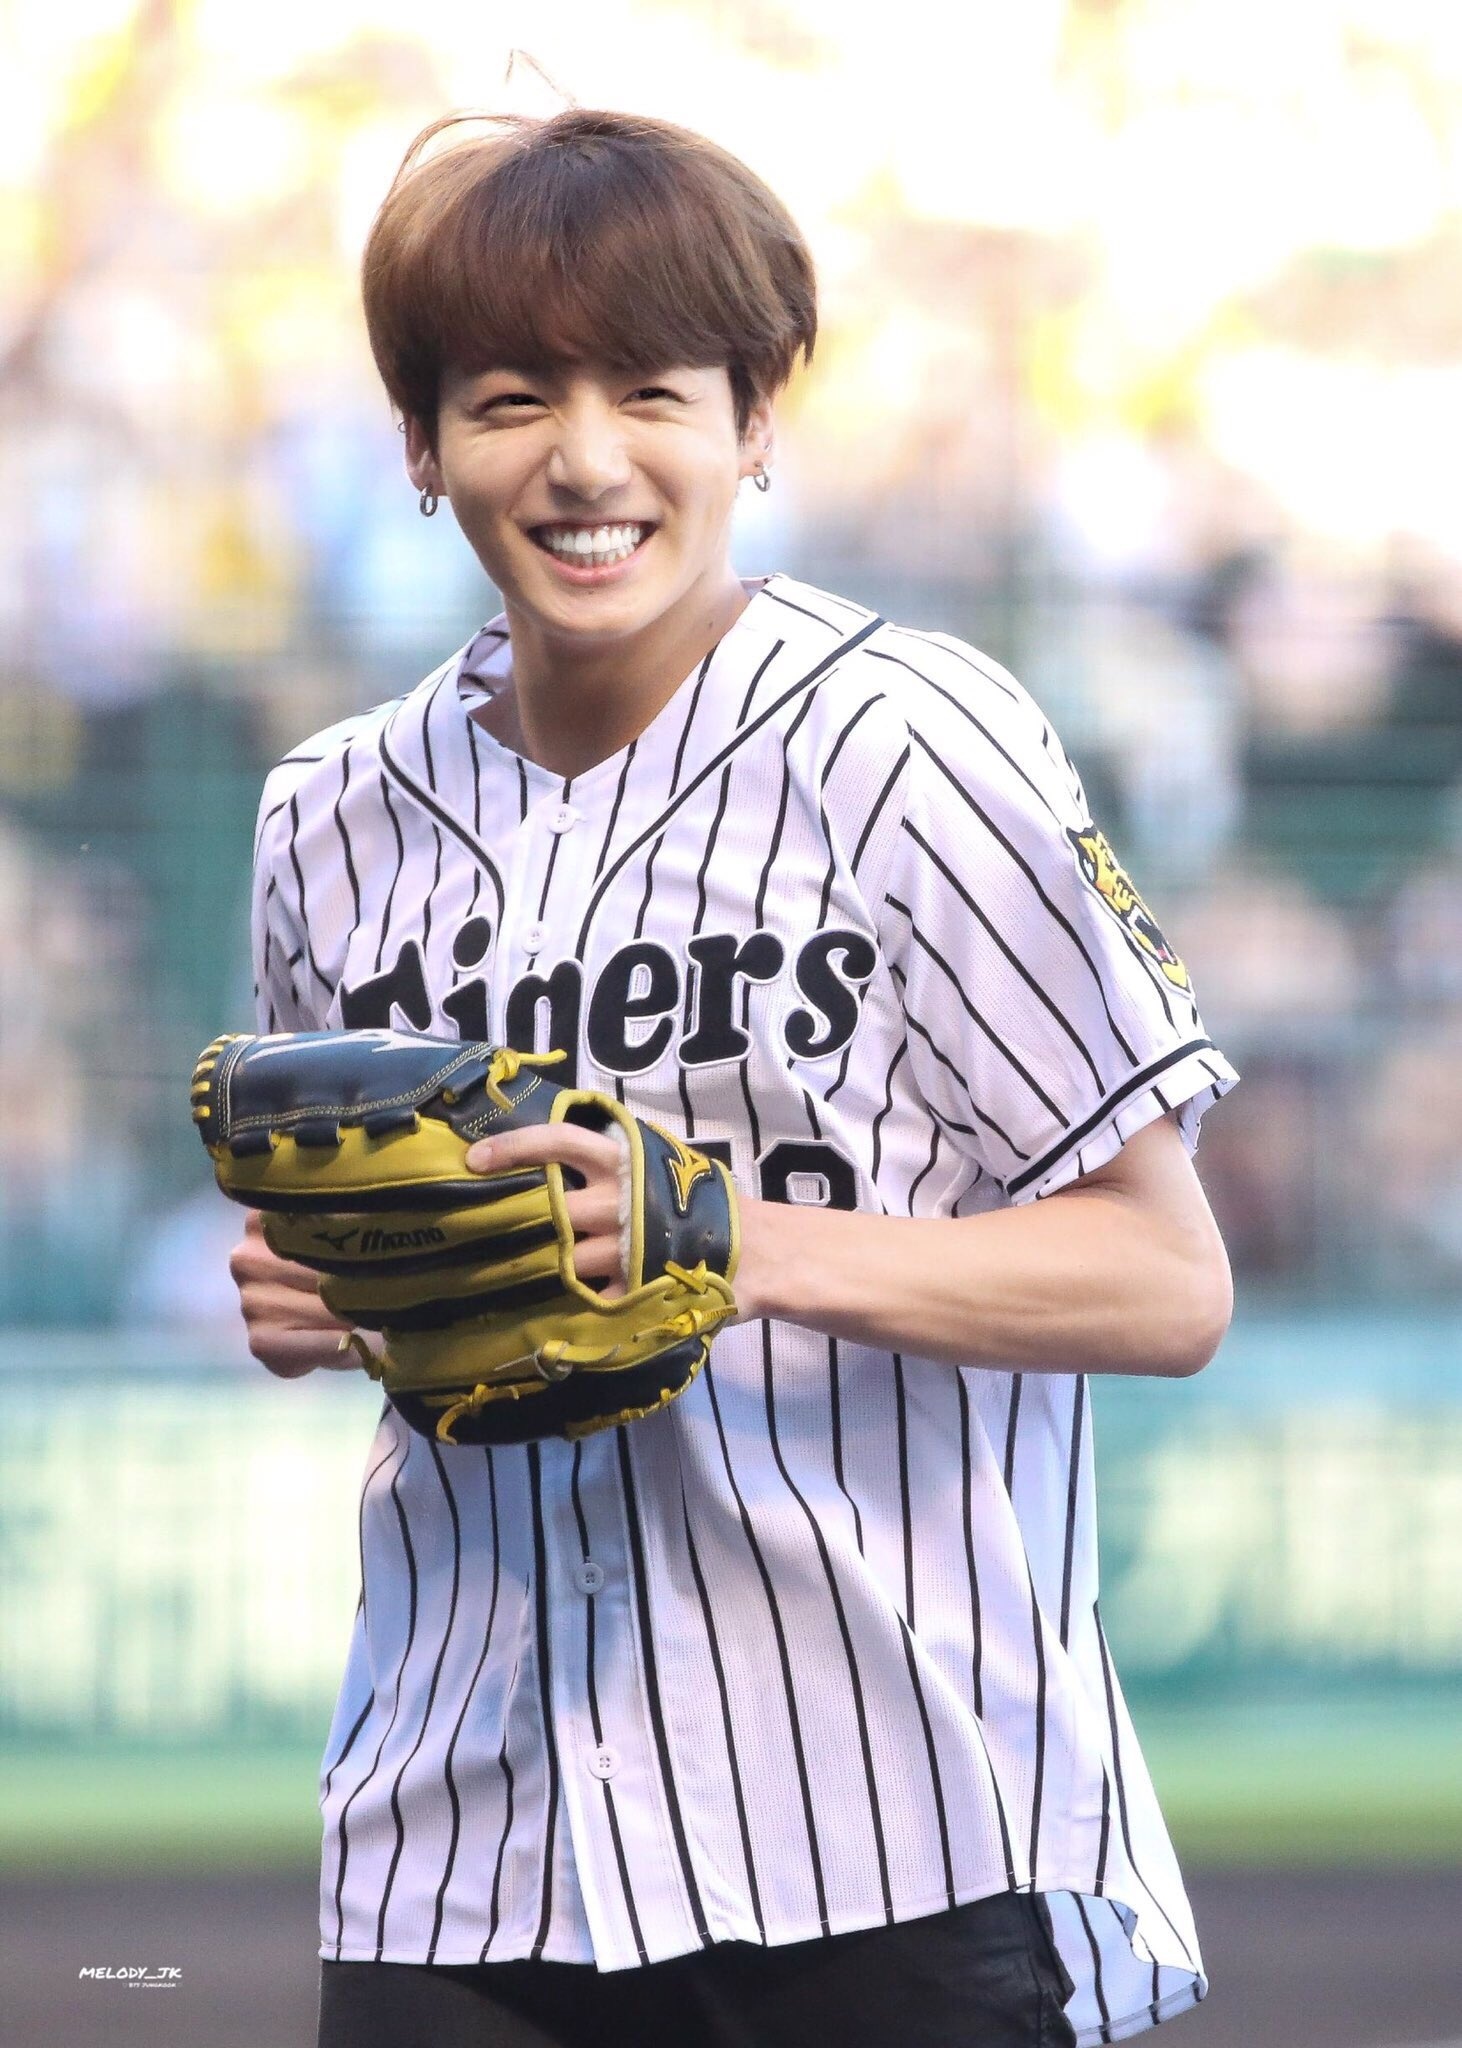 Bts Jungkook Cute - baseball player jungkook